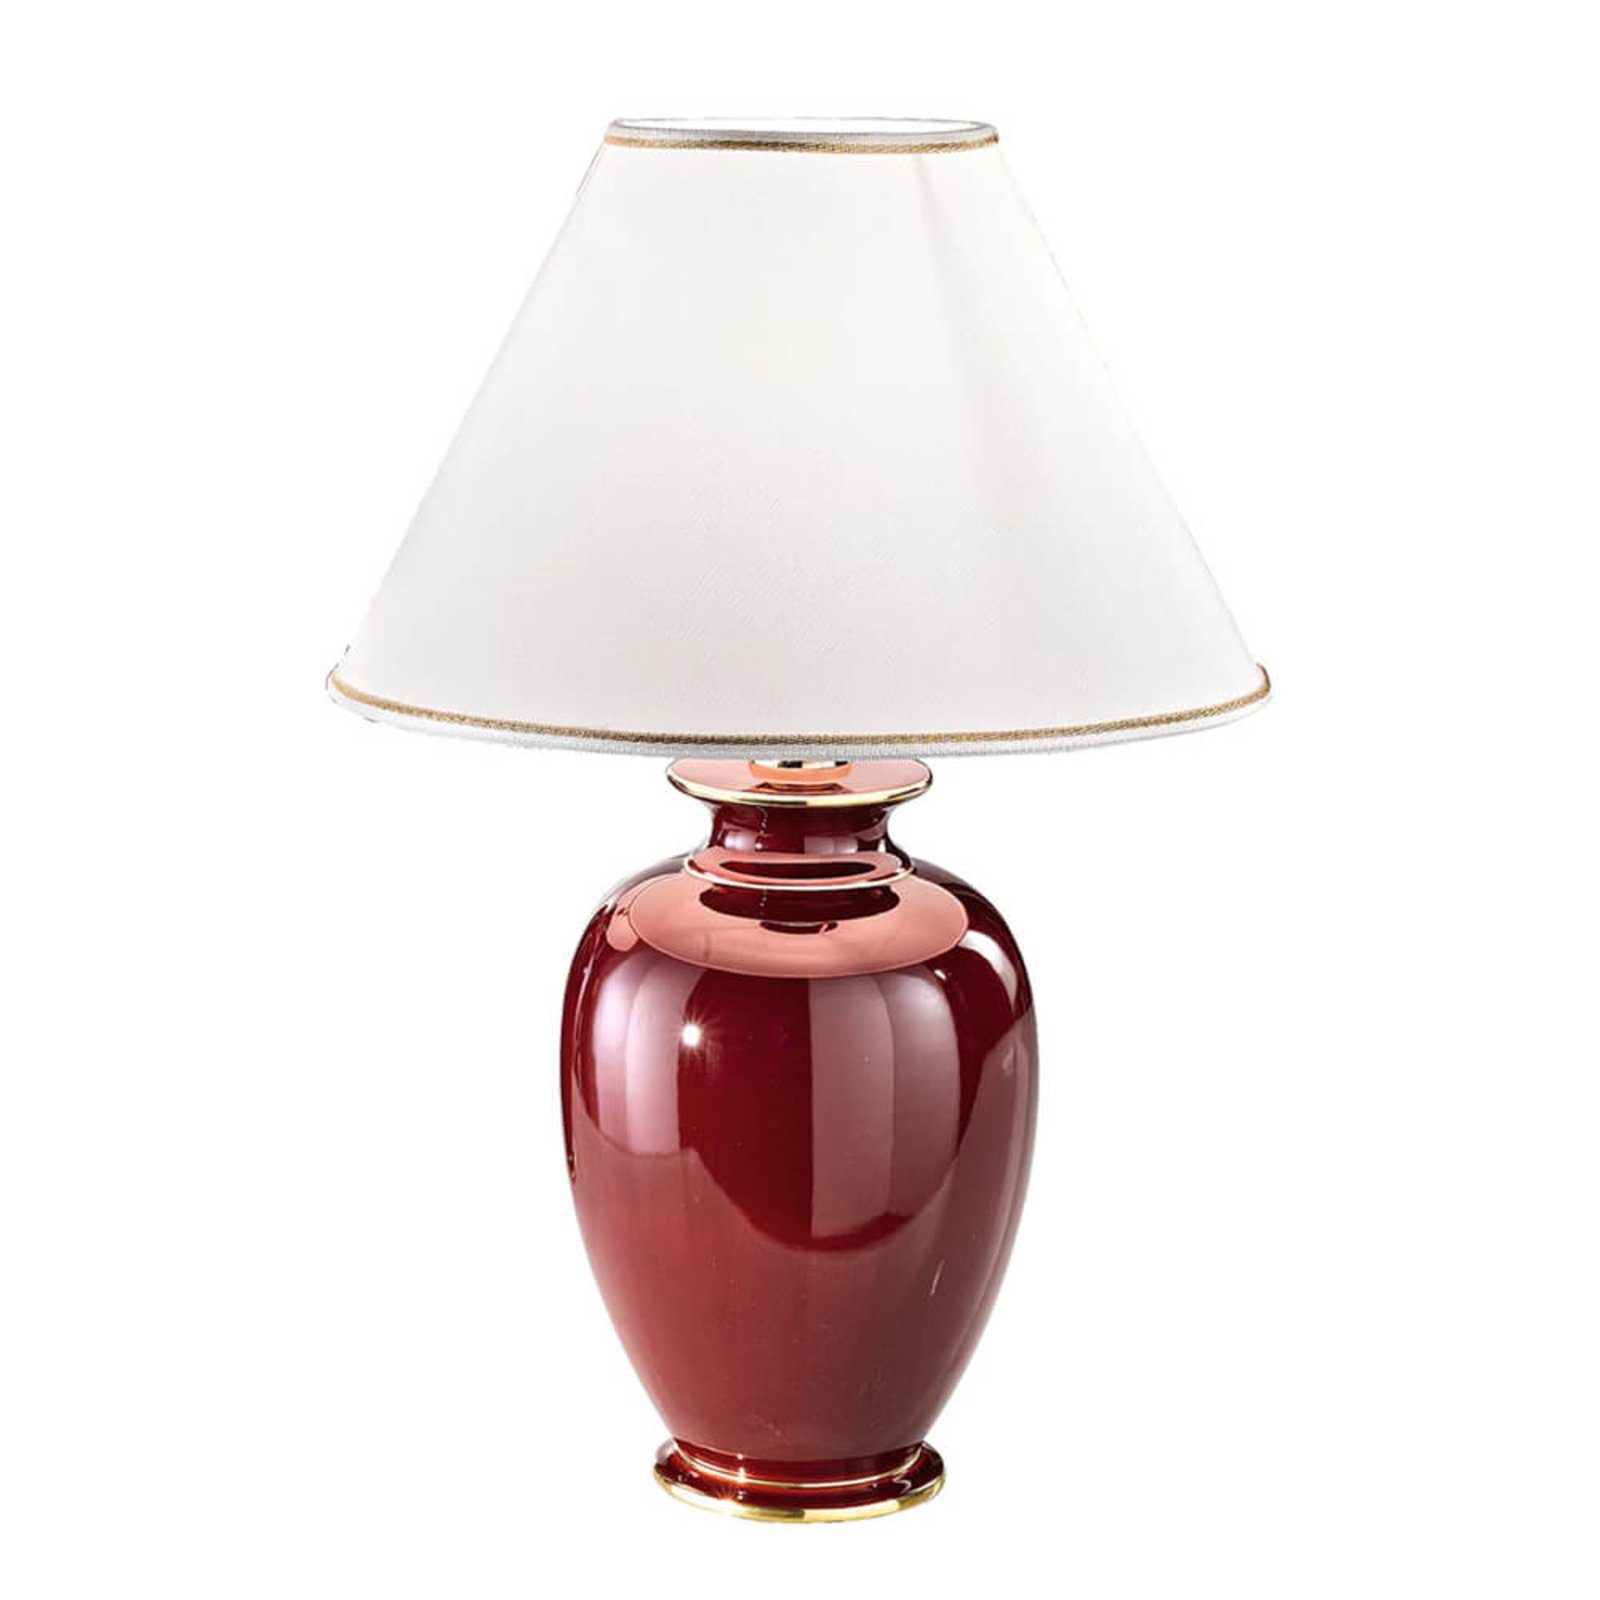 KOLARZ Bordeaux - lampada da tavolo alta 43 cm